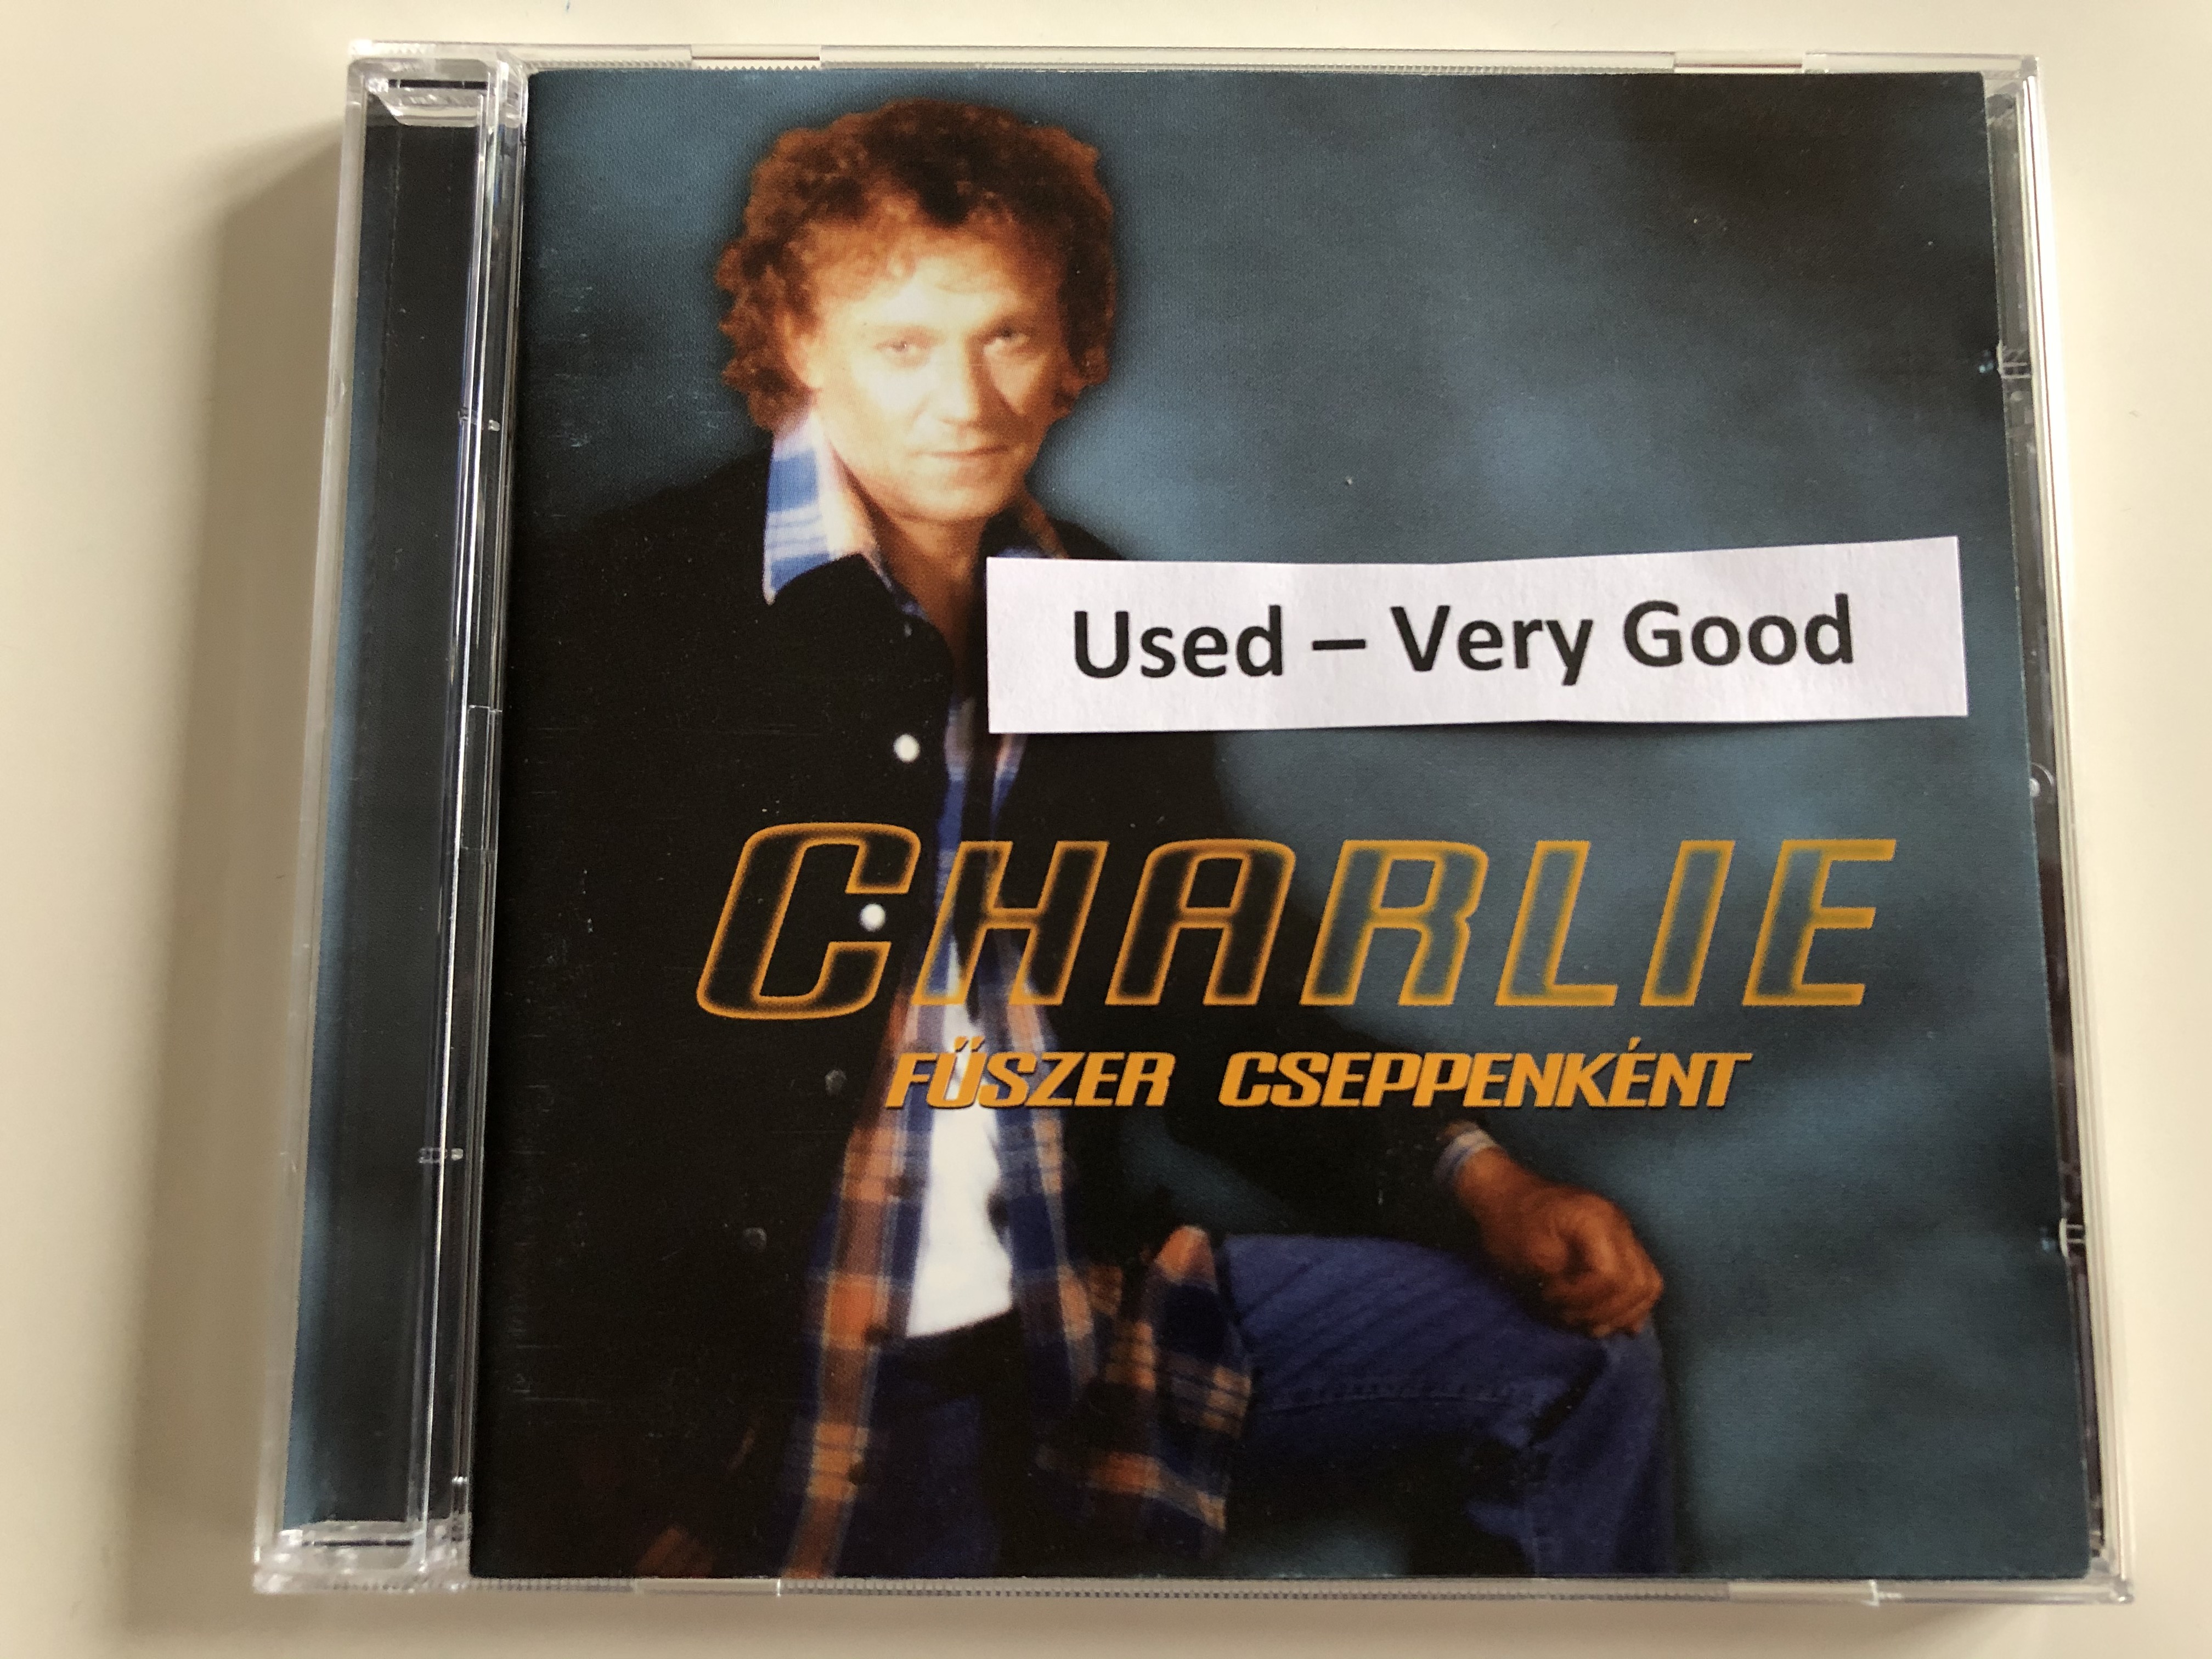 charlie-f-szer-cseppenk-nt-magneoton-audio-cd-1998-3984-25349-2-1-.jpg